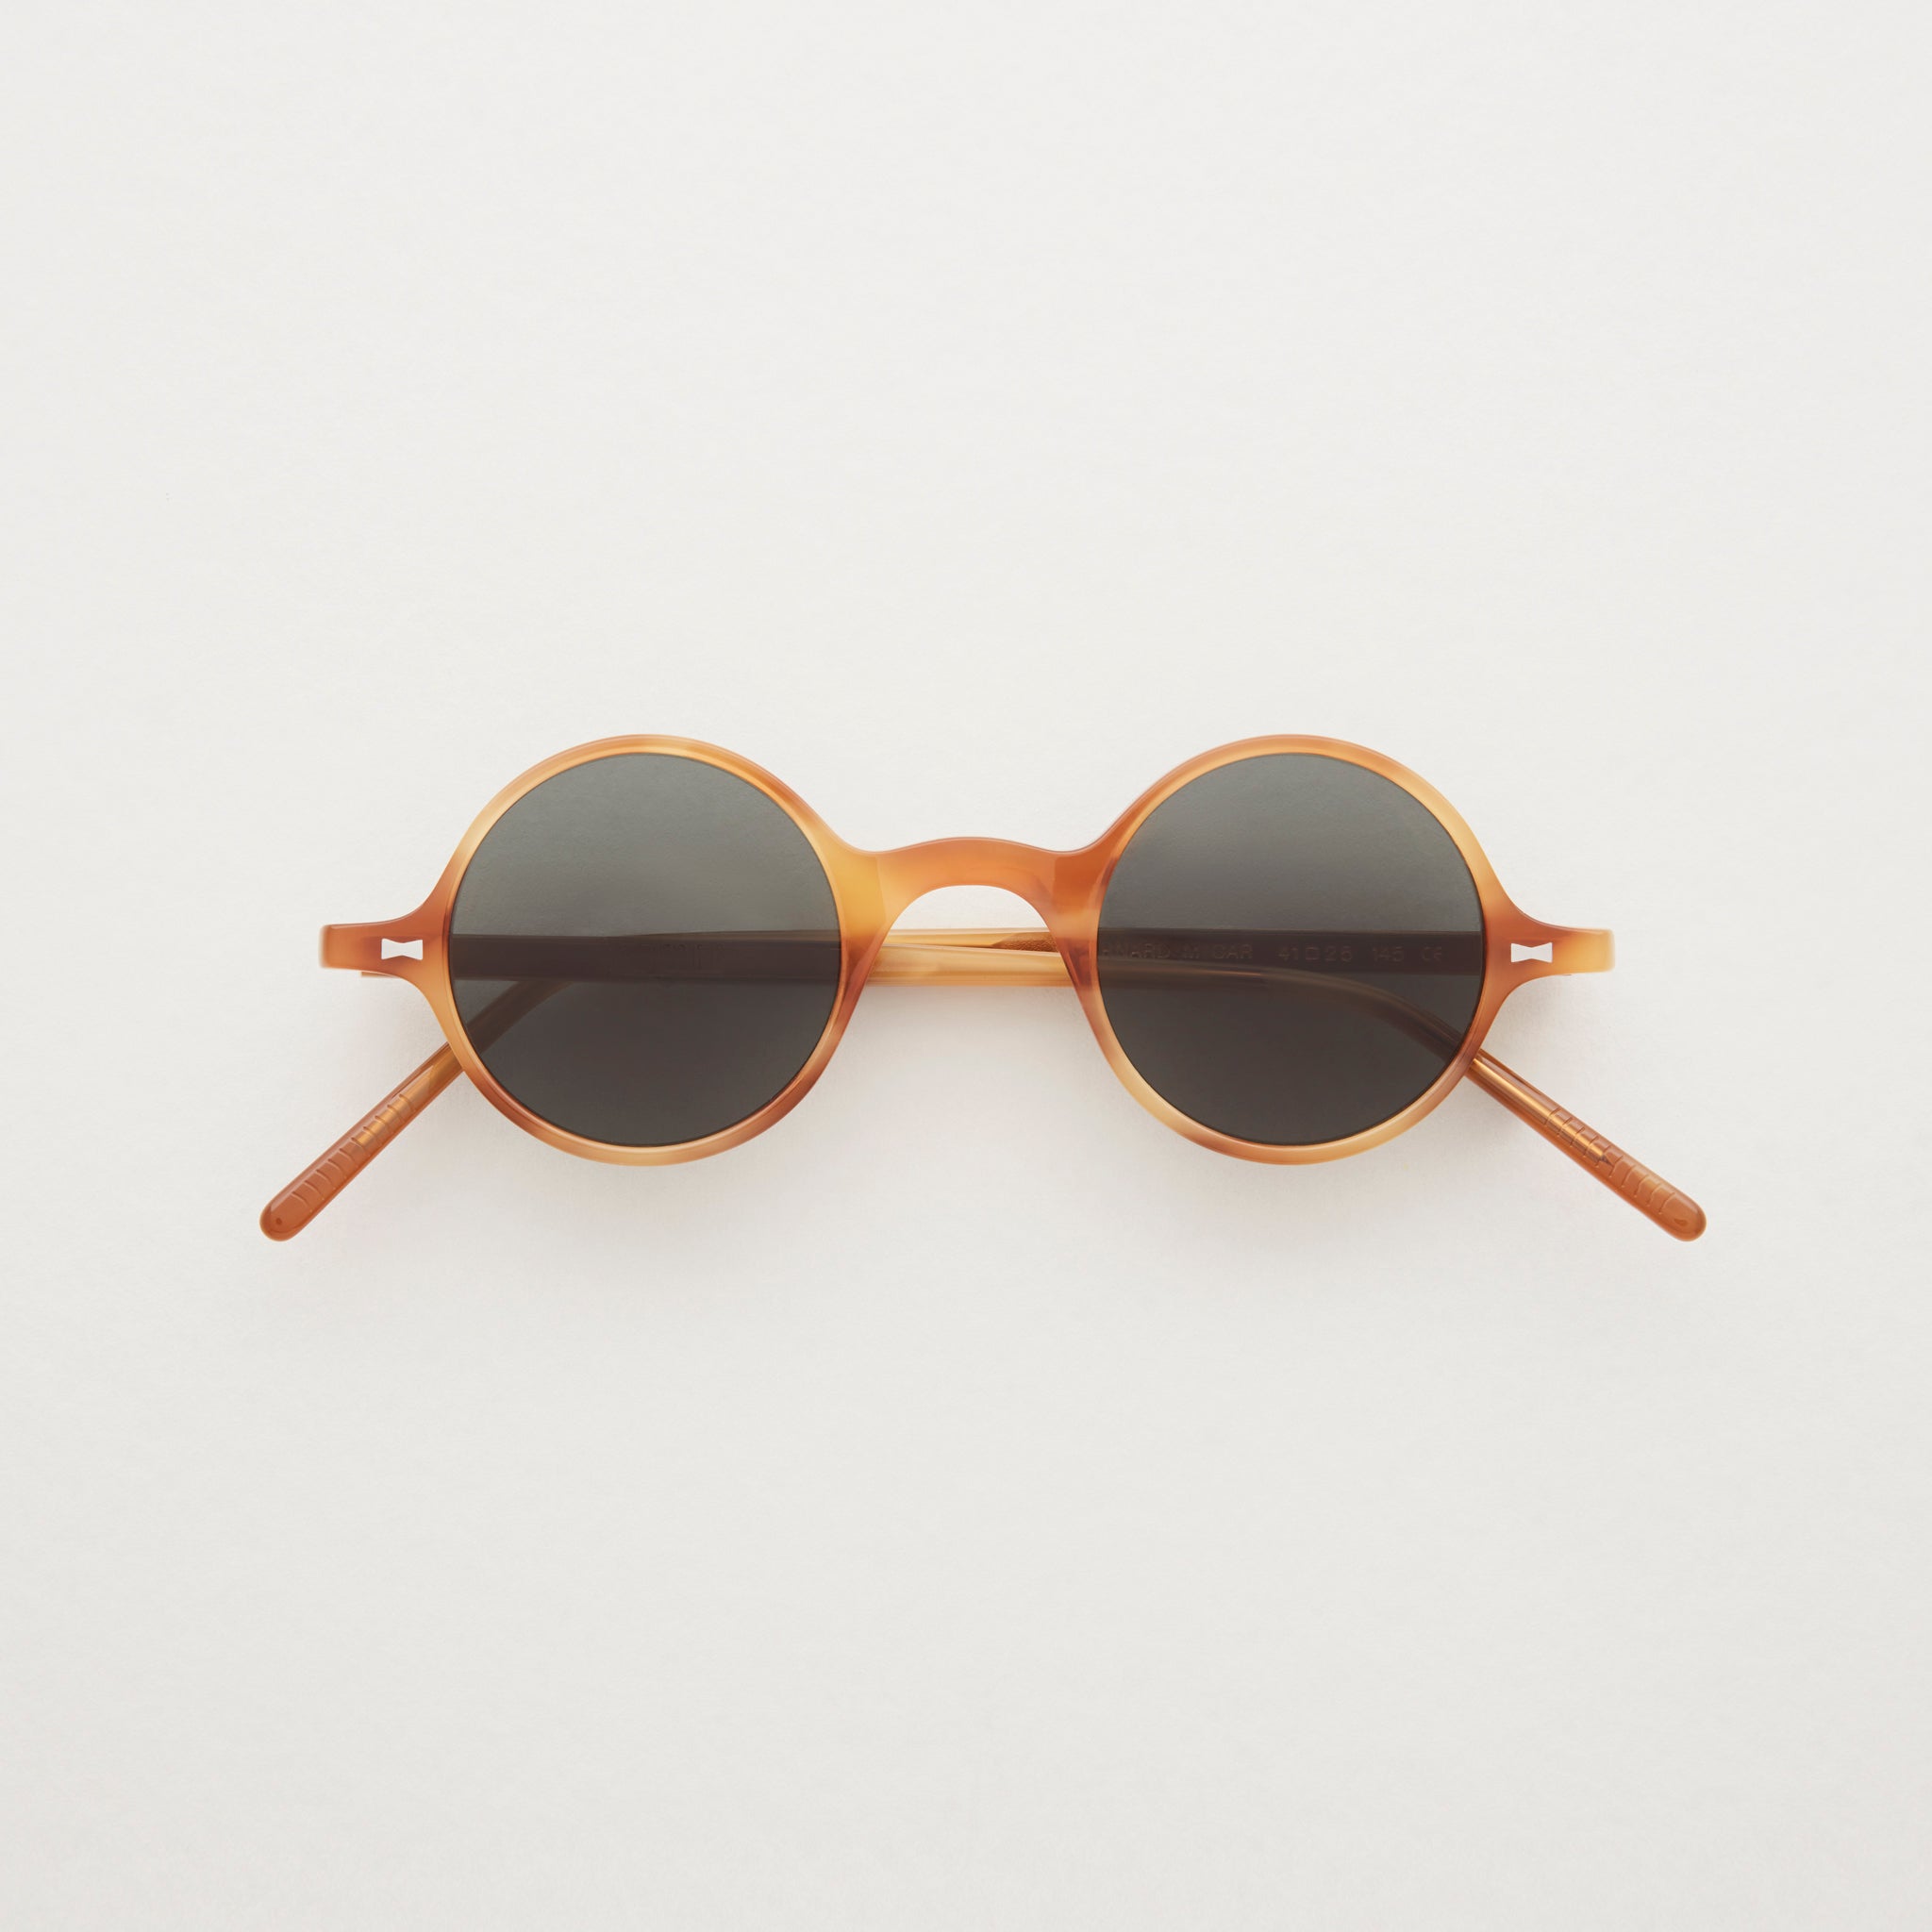 44mm Vintage small Round Sunglasses Reading Glasses man women +100 +125  +150 | eBay